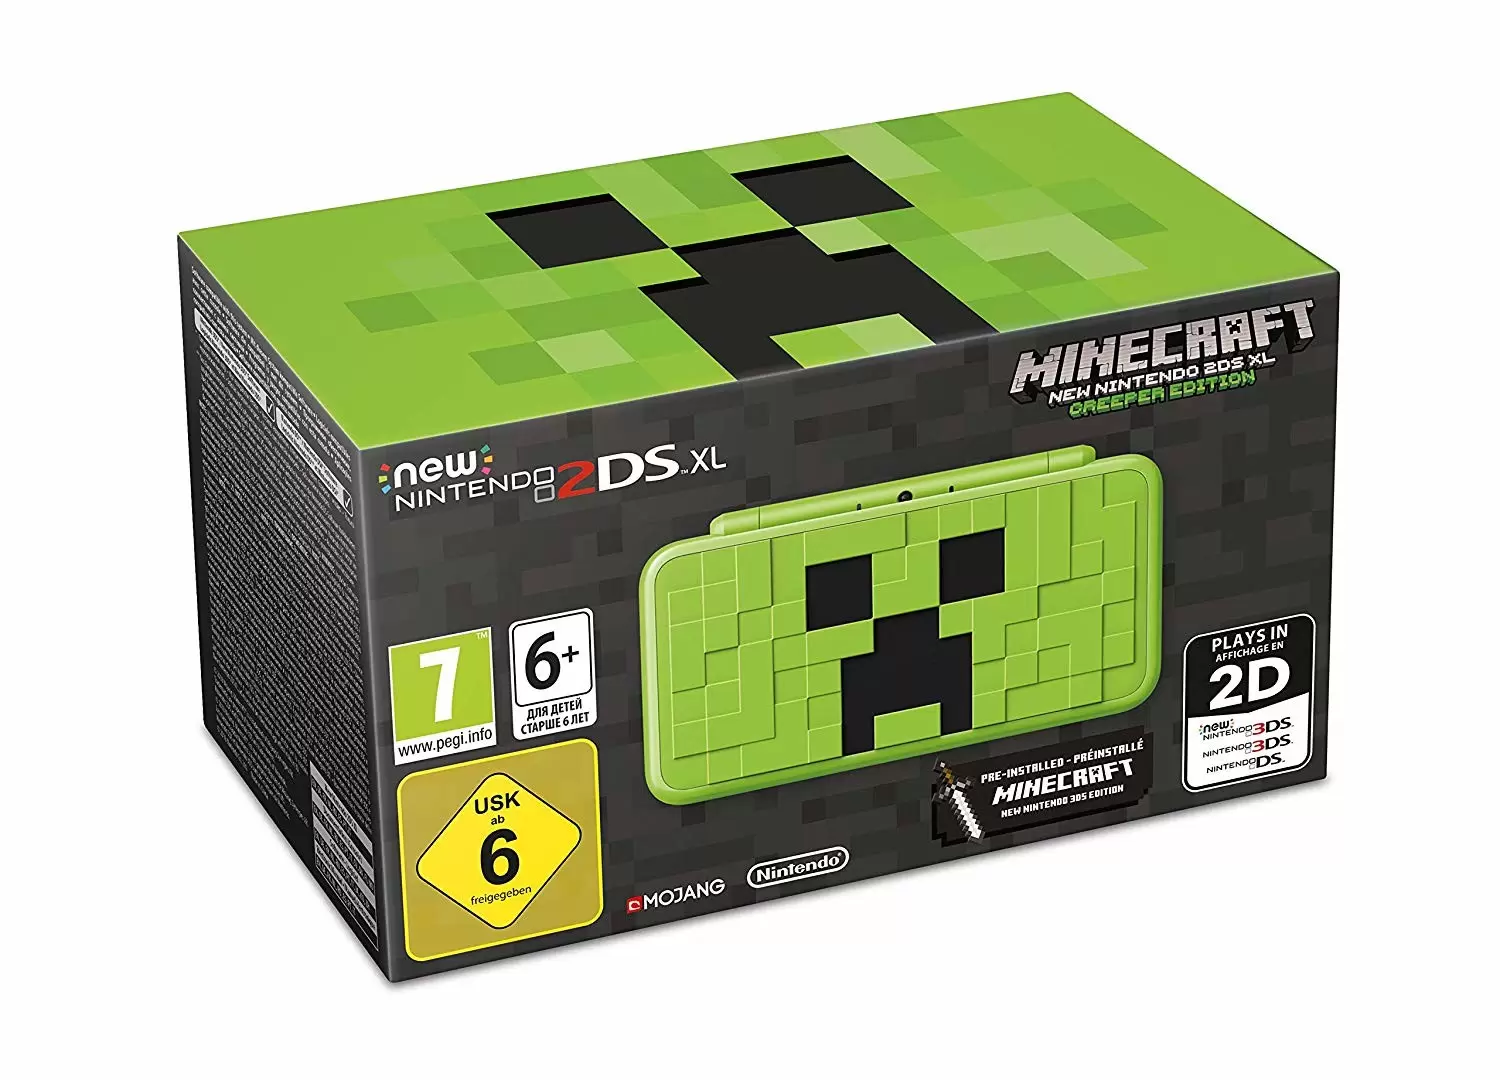 New Nintendo 2DS XL Minecraft - Creeper Edition - Nintendo 2DS Stuff